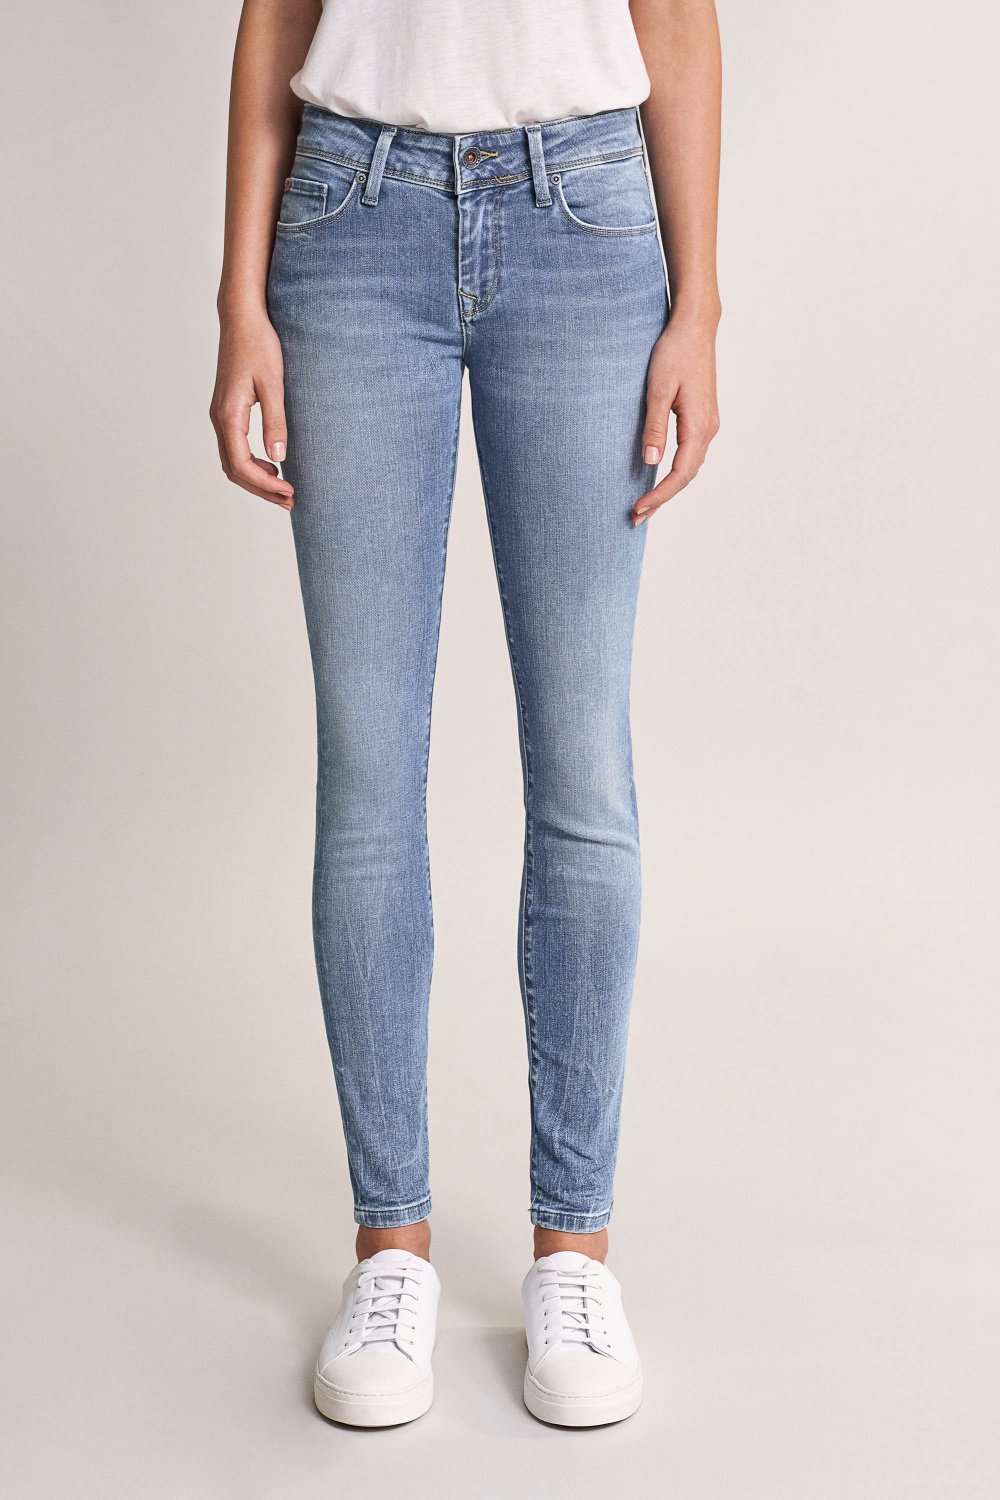 Skinny Colette jeans | Jeans Salsa Jeans